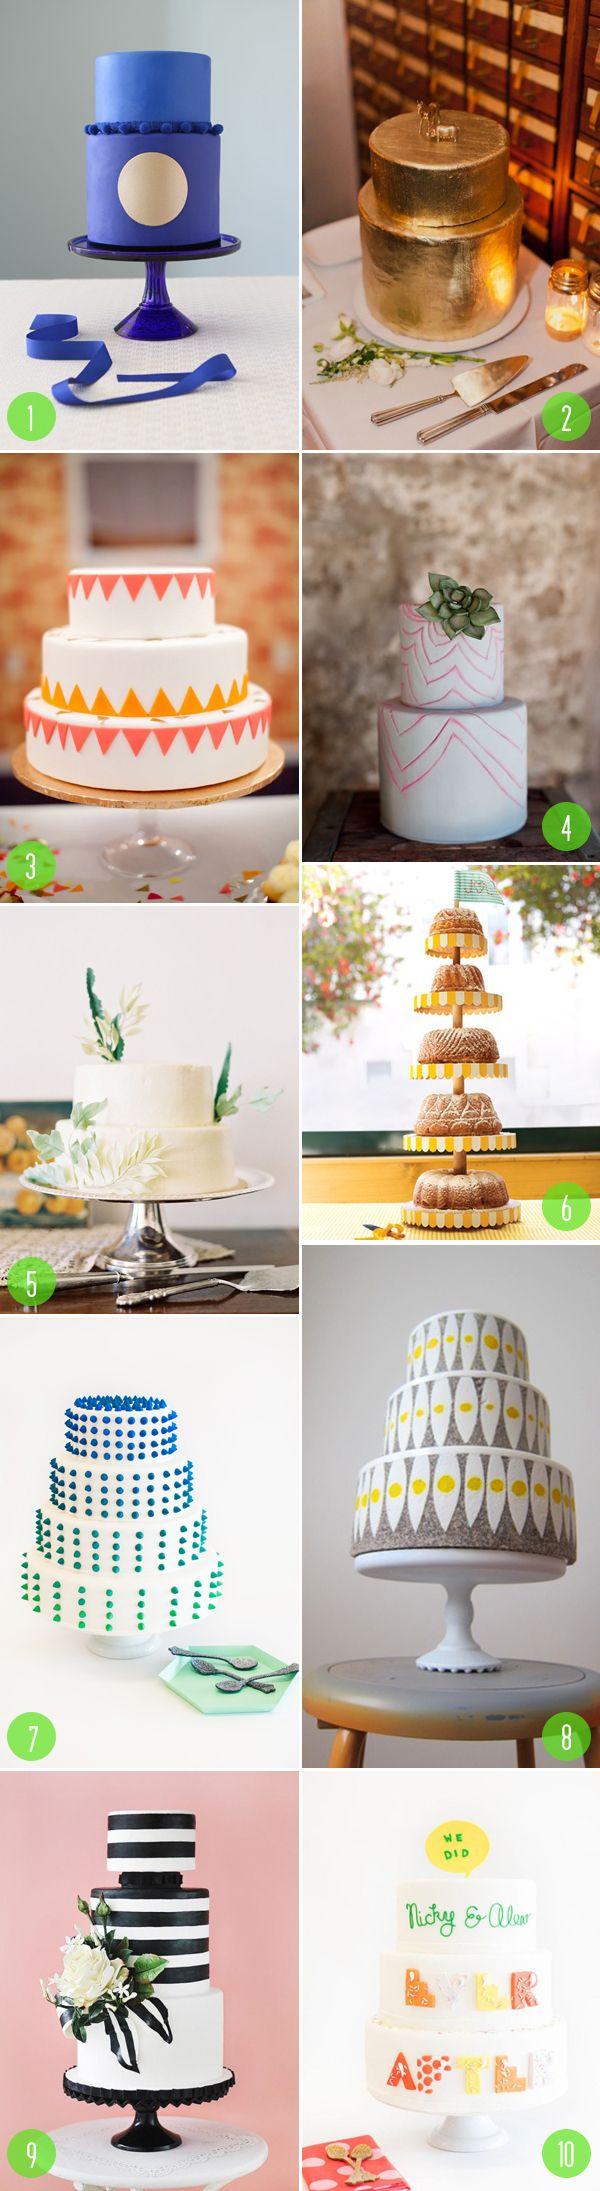 Wedding - Top 10: Modern Wedding Cakes 